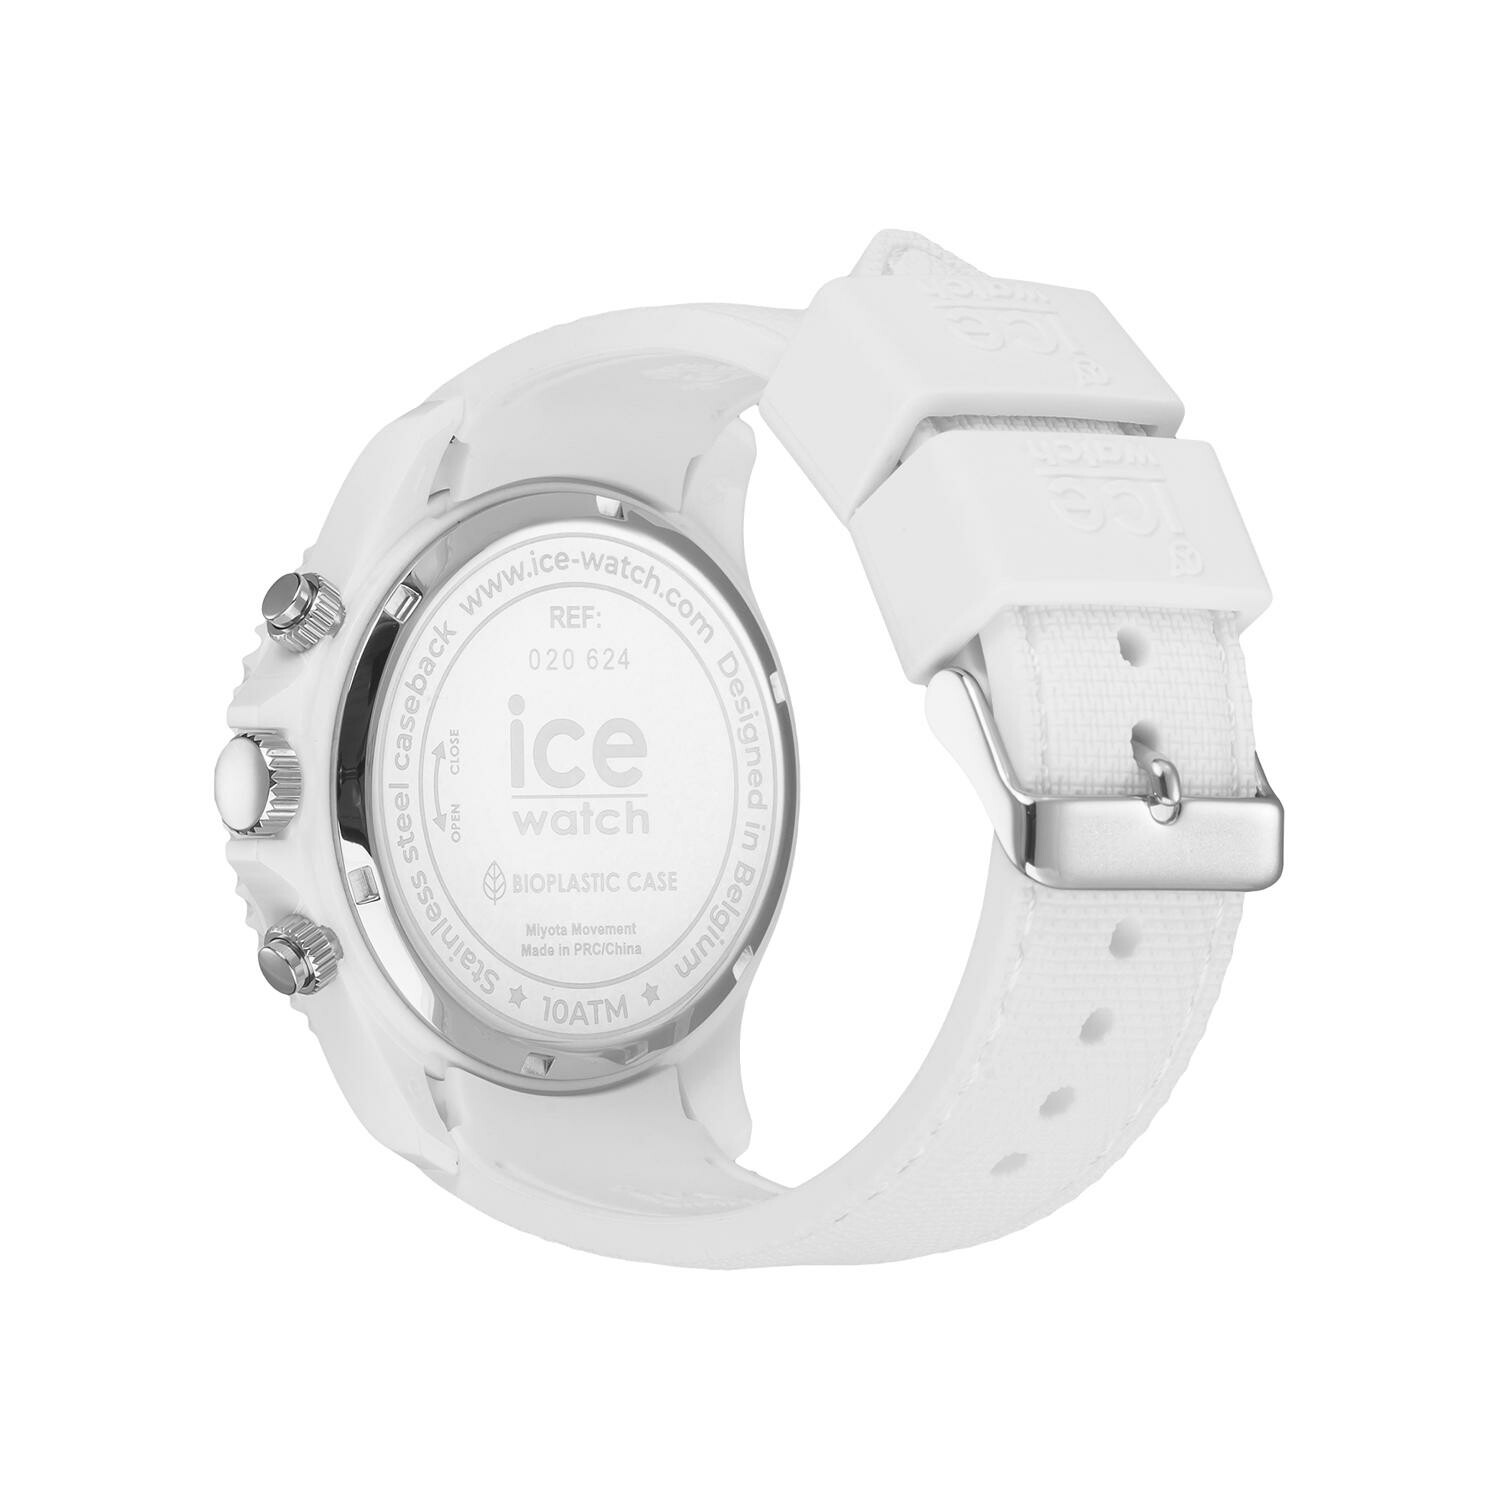 Achat Montre Ice-Watch ICE chrono 020624 blue White